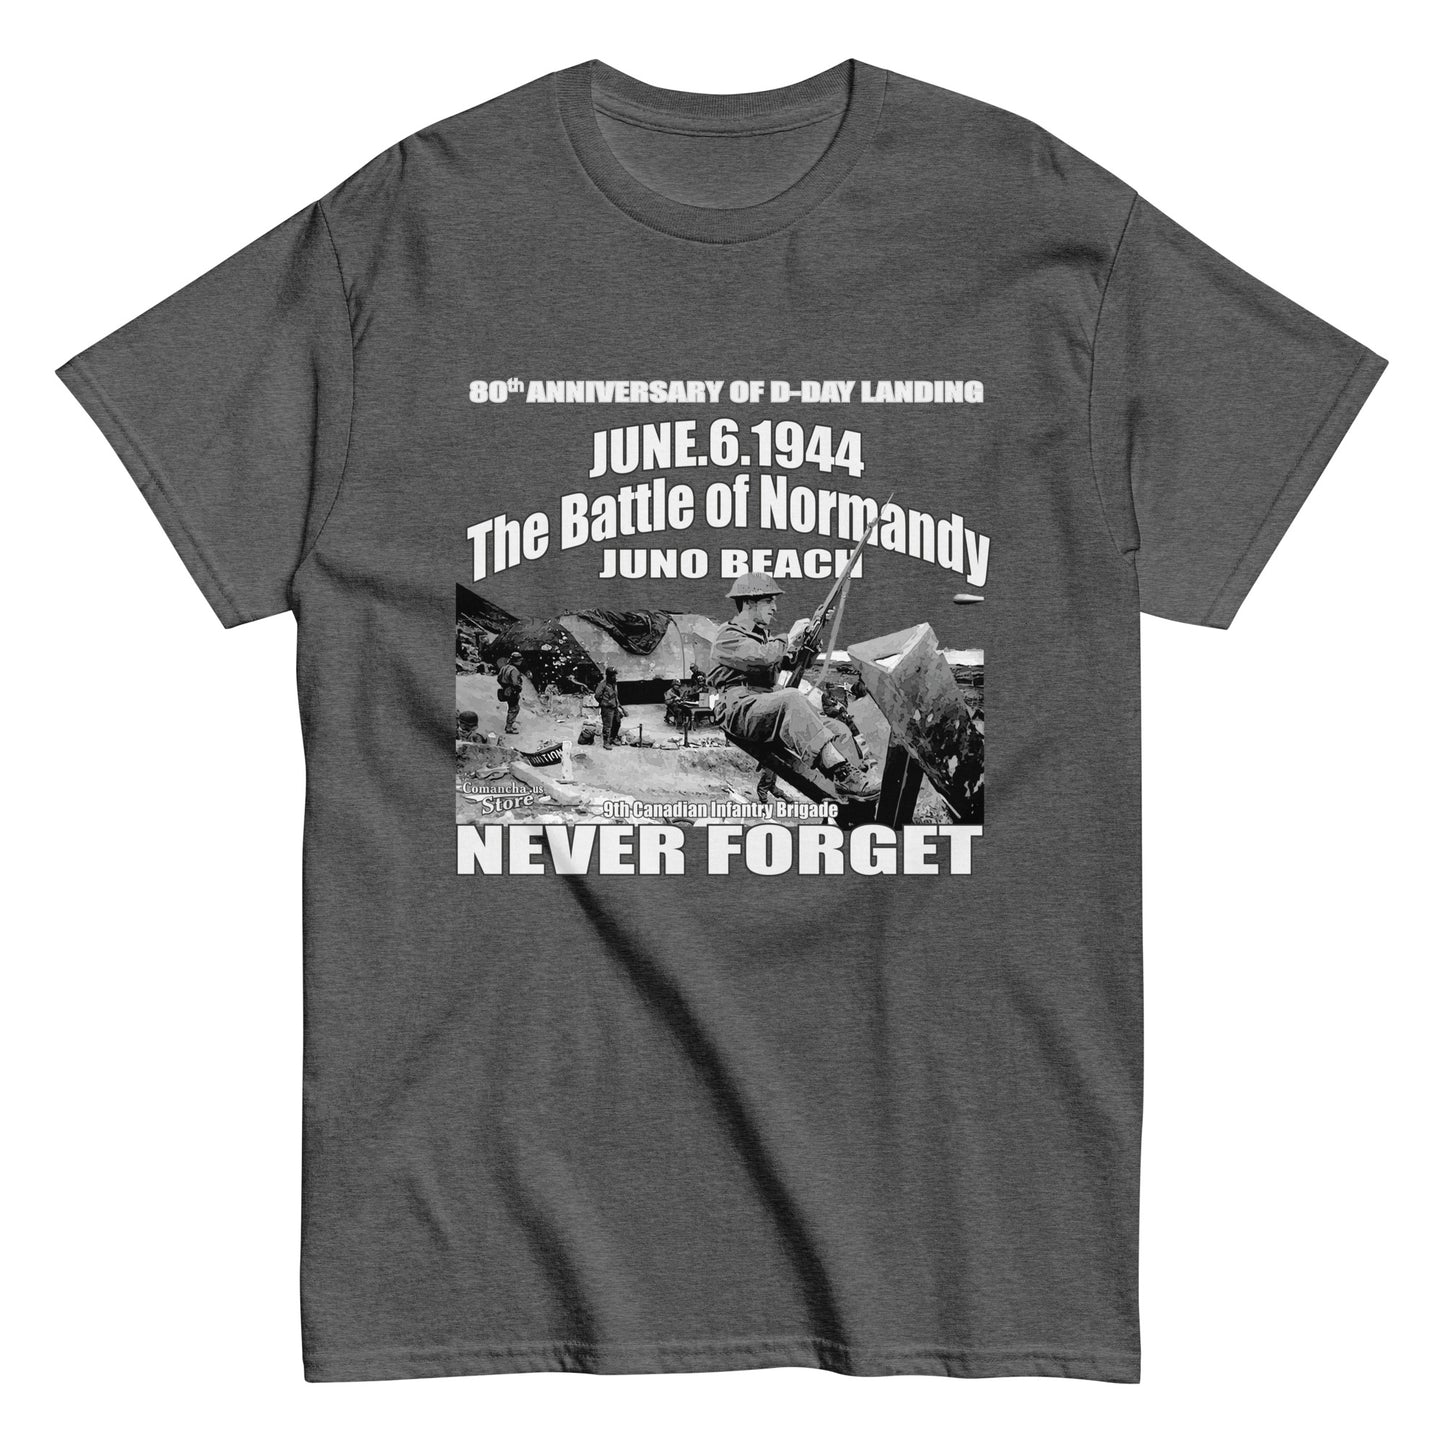 Juno Beach 1944 T-shirt, Comancha Store,